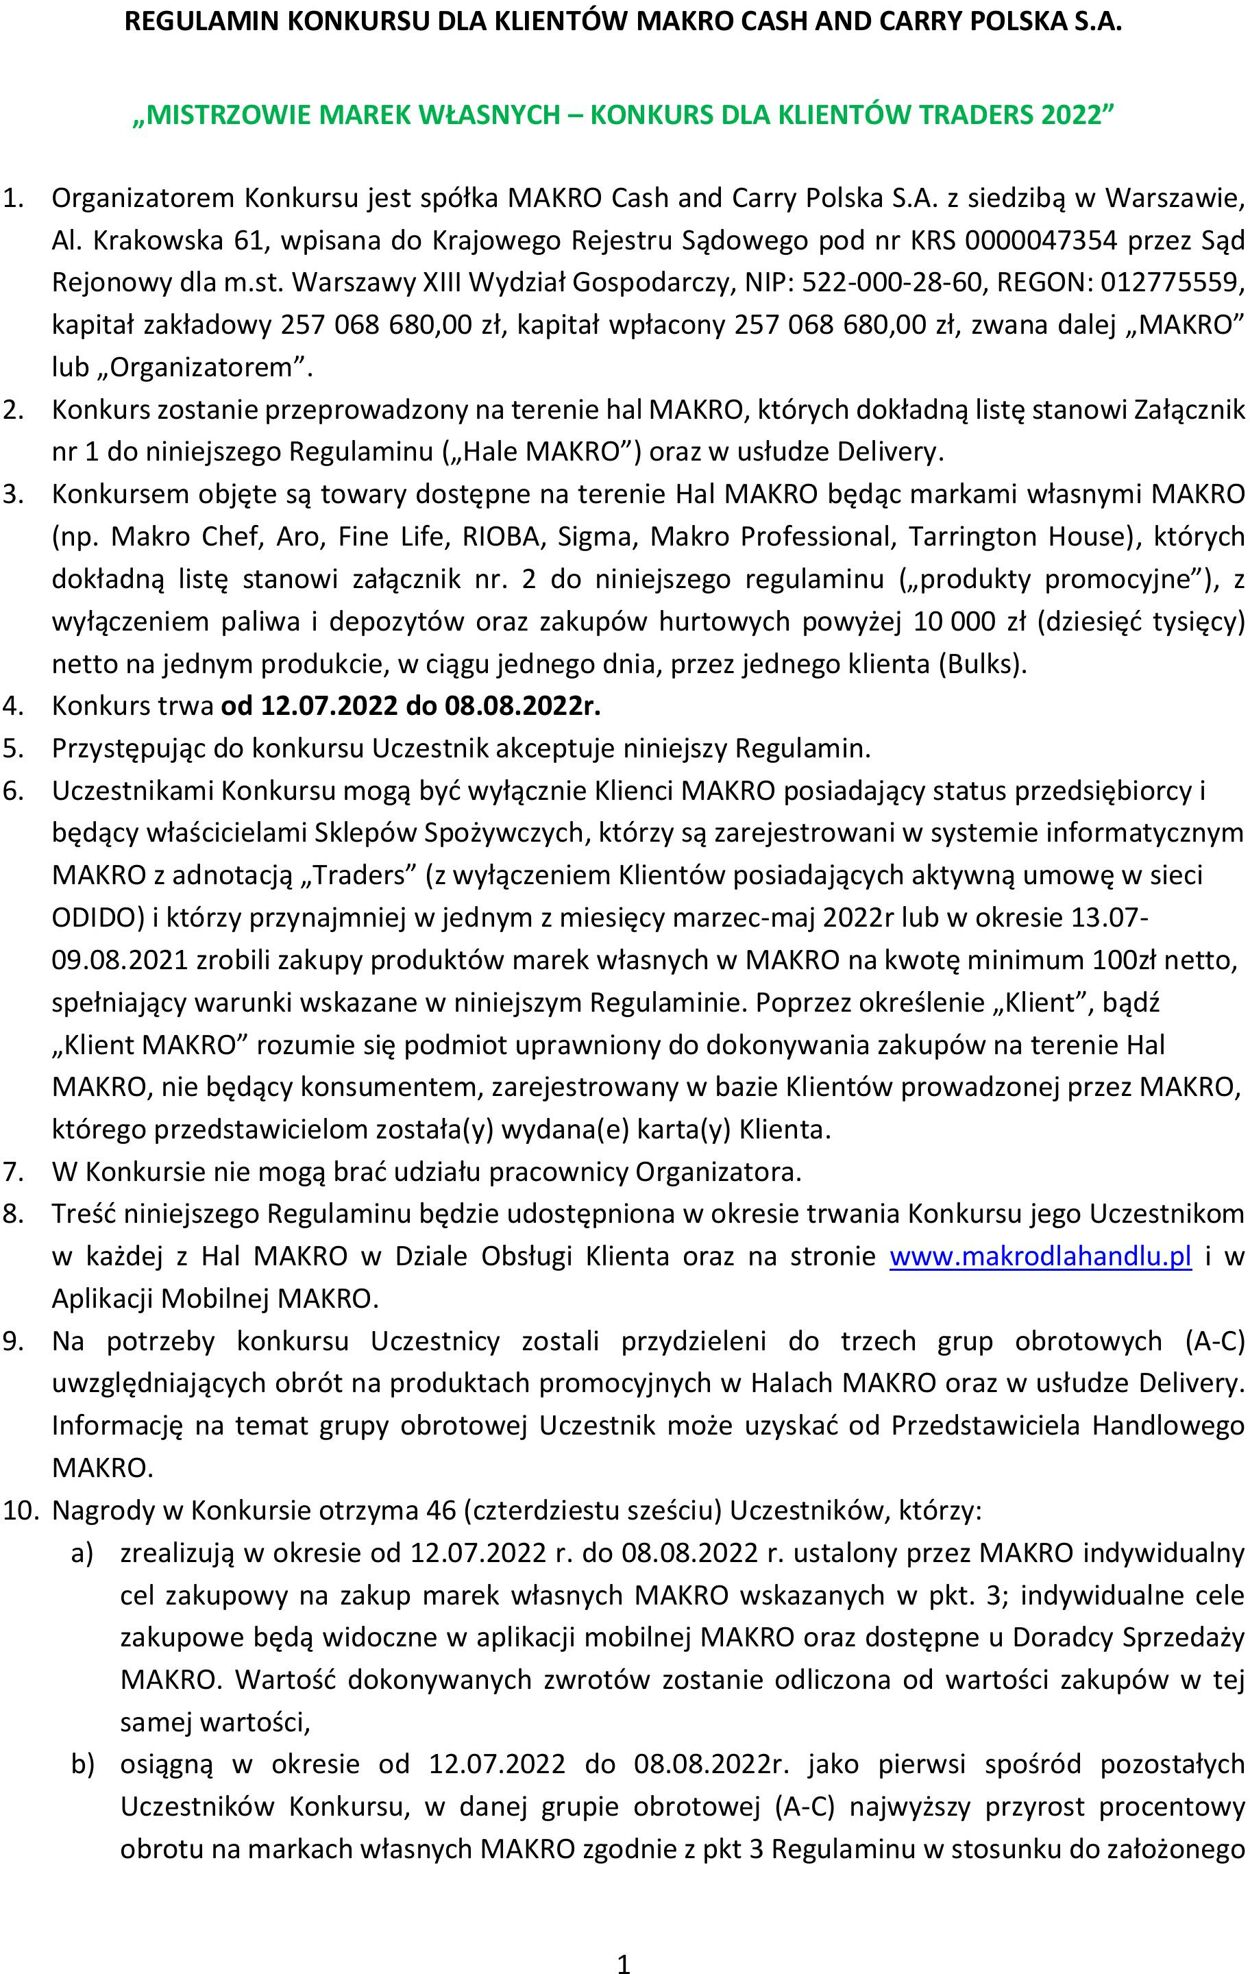 Gazetka Makro 12.07.2022 - 08.08.2022